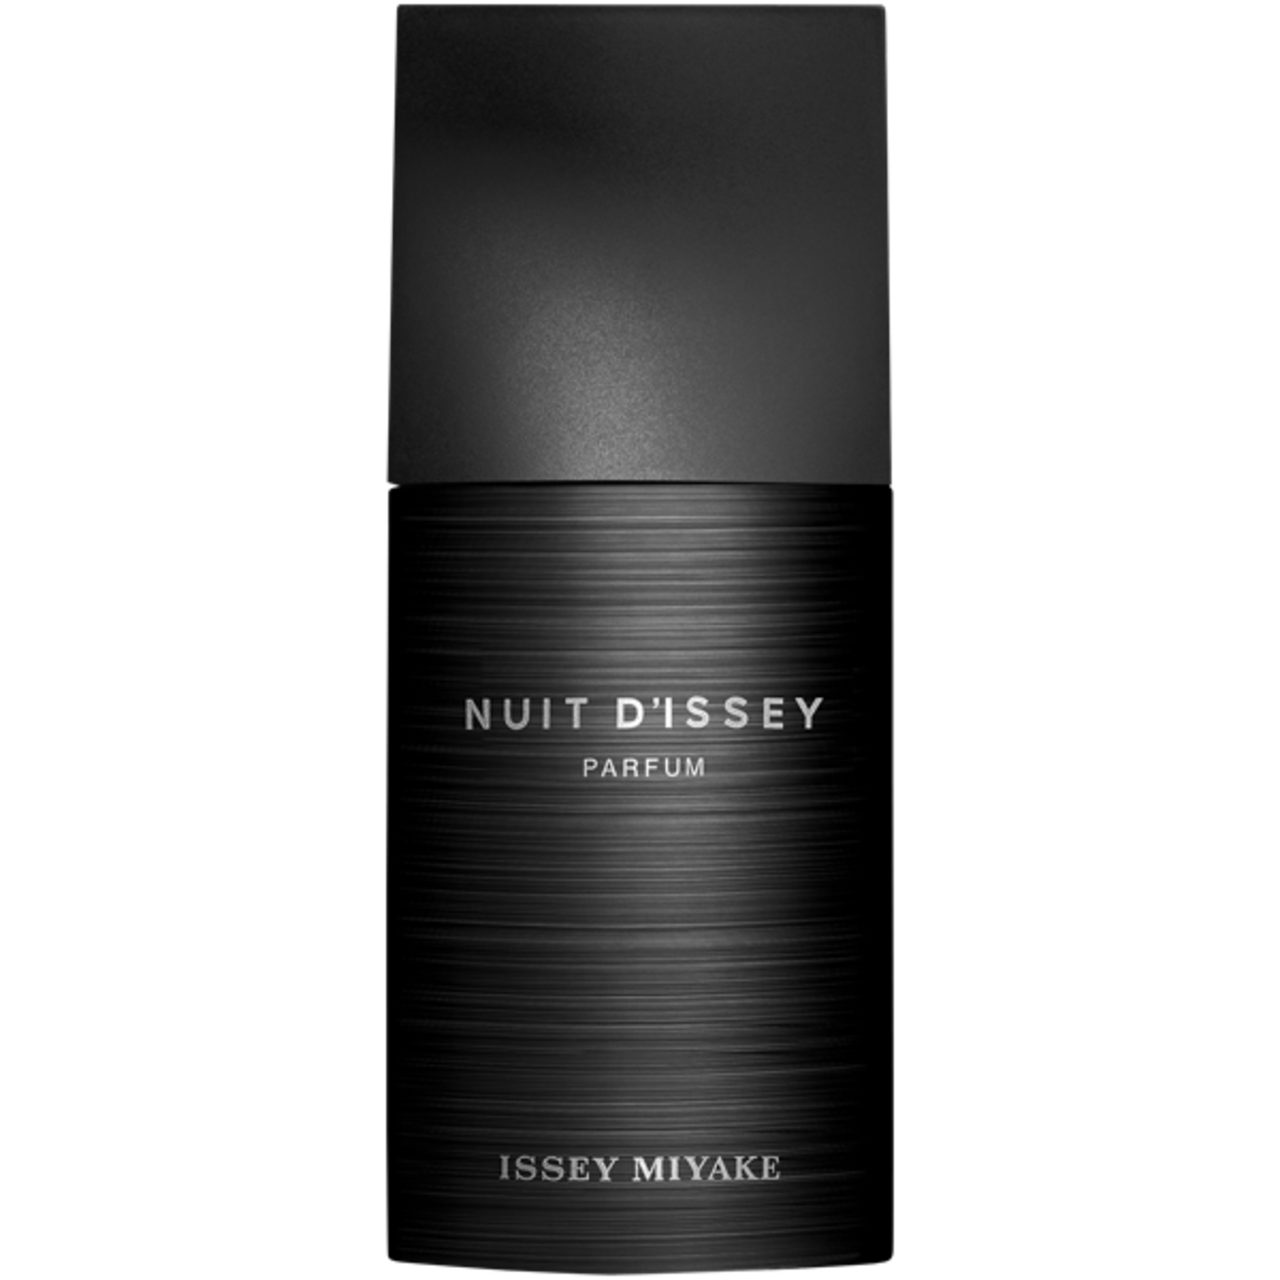 Issey Miyake Eau de Toilette Nuit d'Issey Parfum